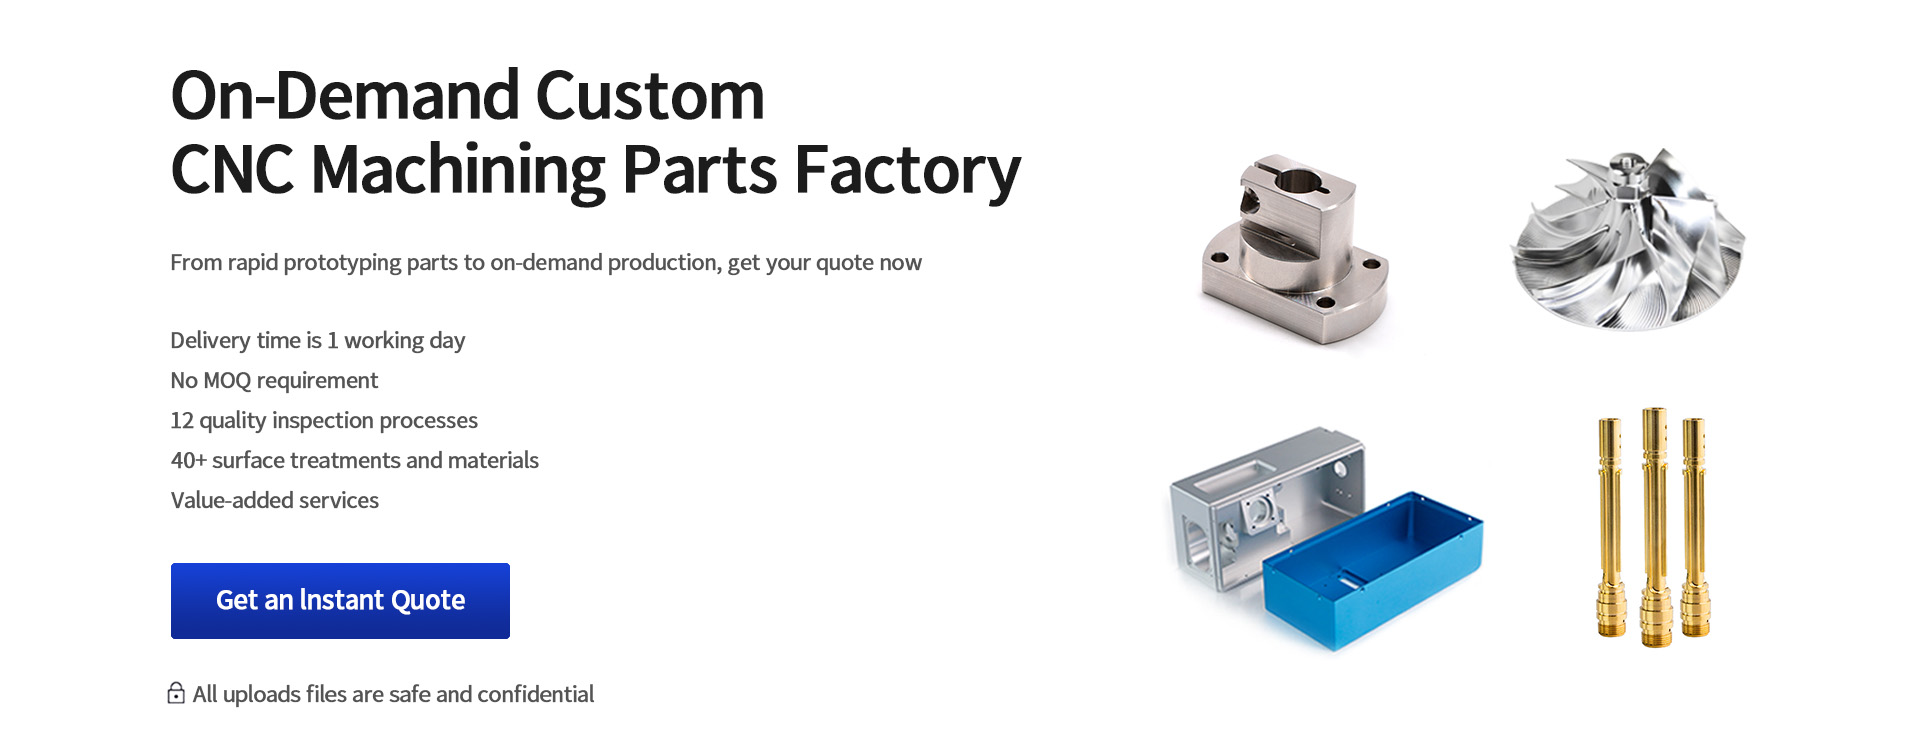 On-Demand Custom CNC Machining Parts Factory